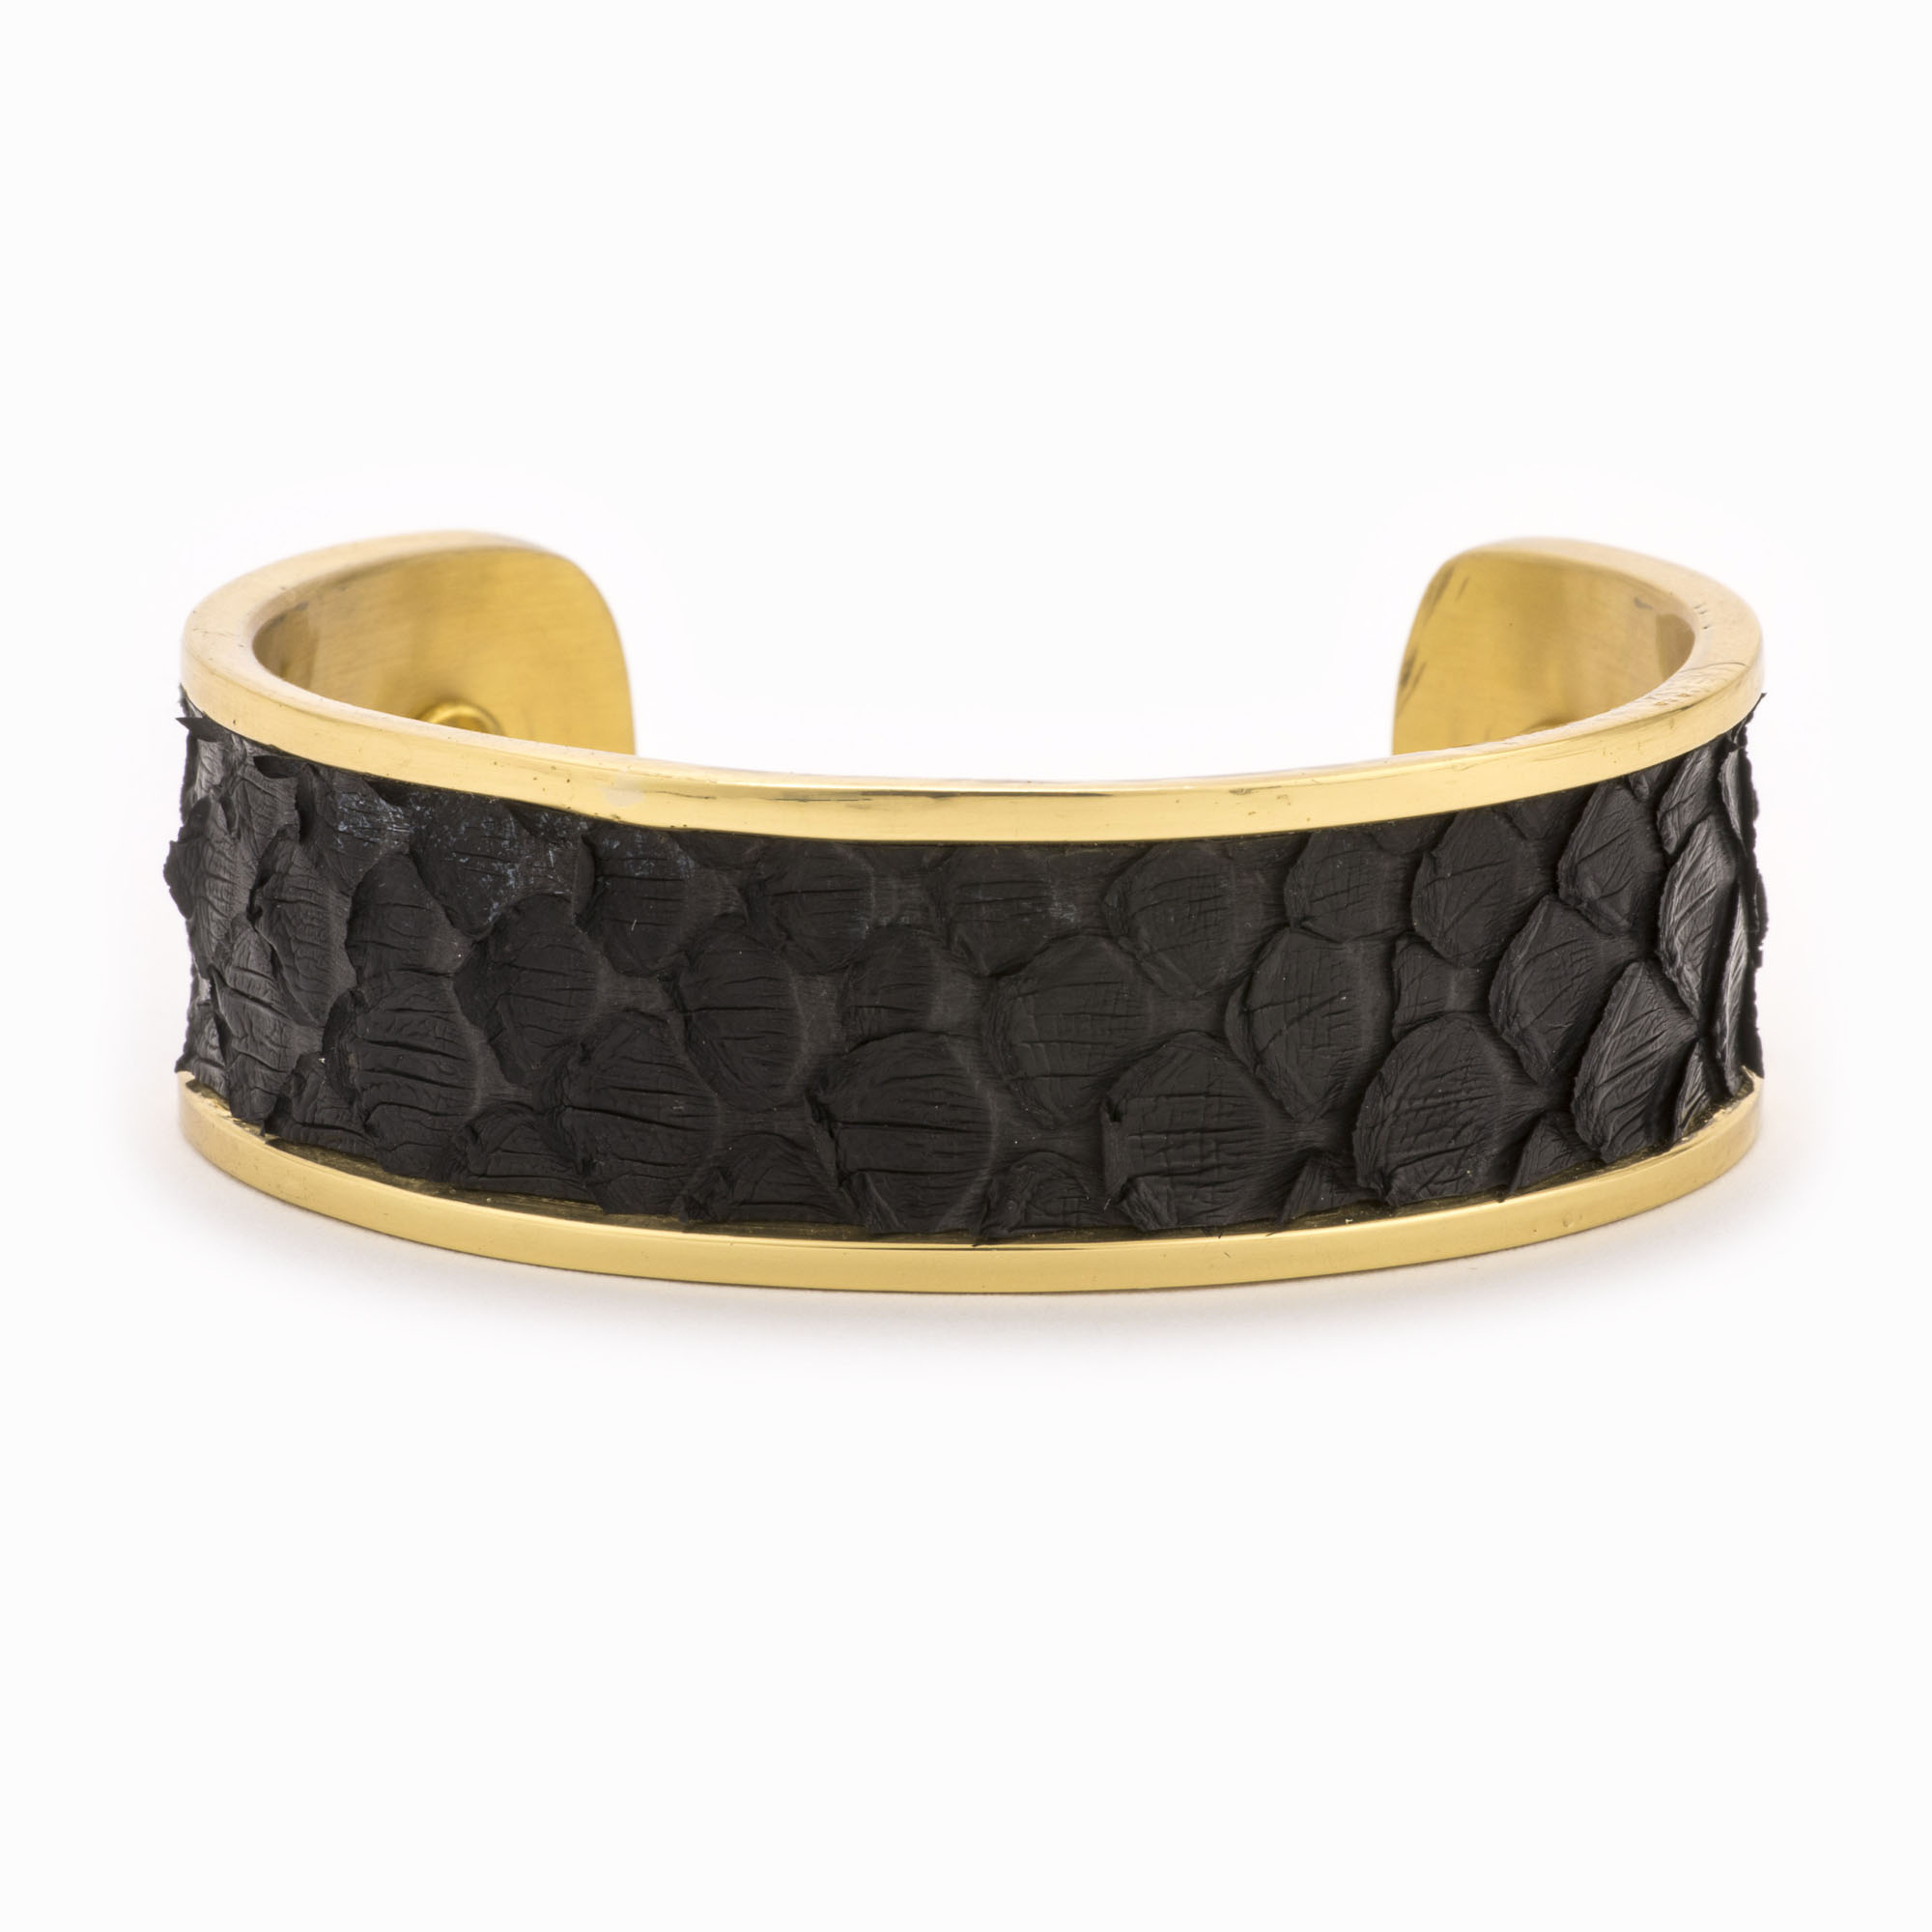 Featured image for “Medium Black Gold Cuff”